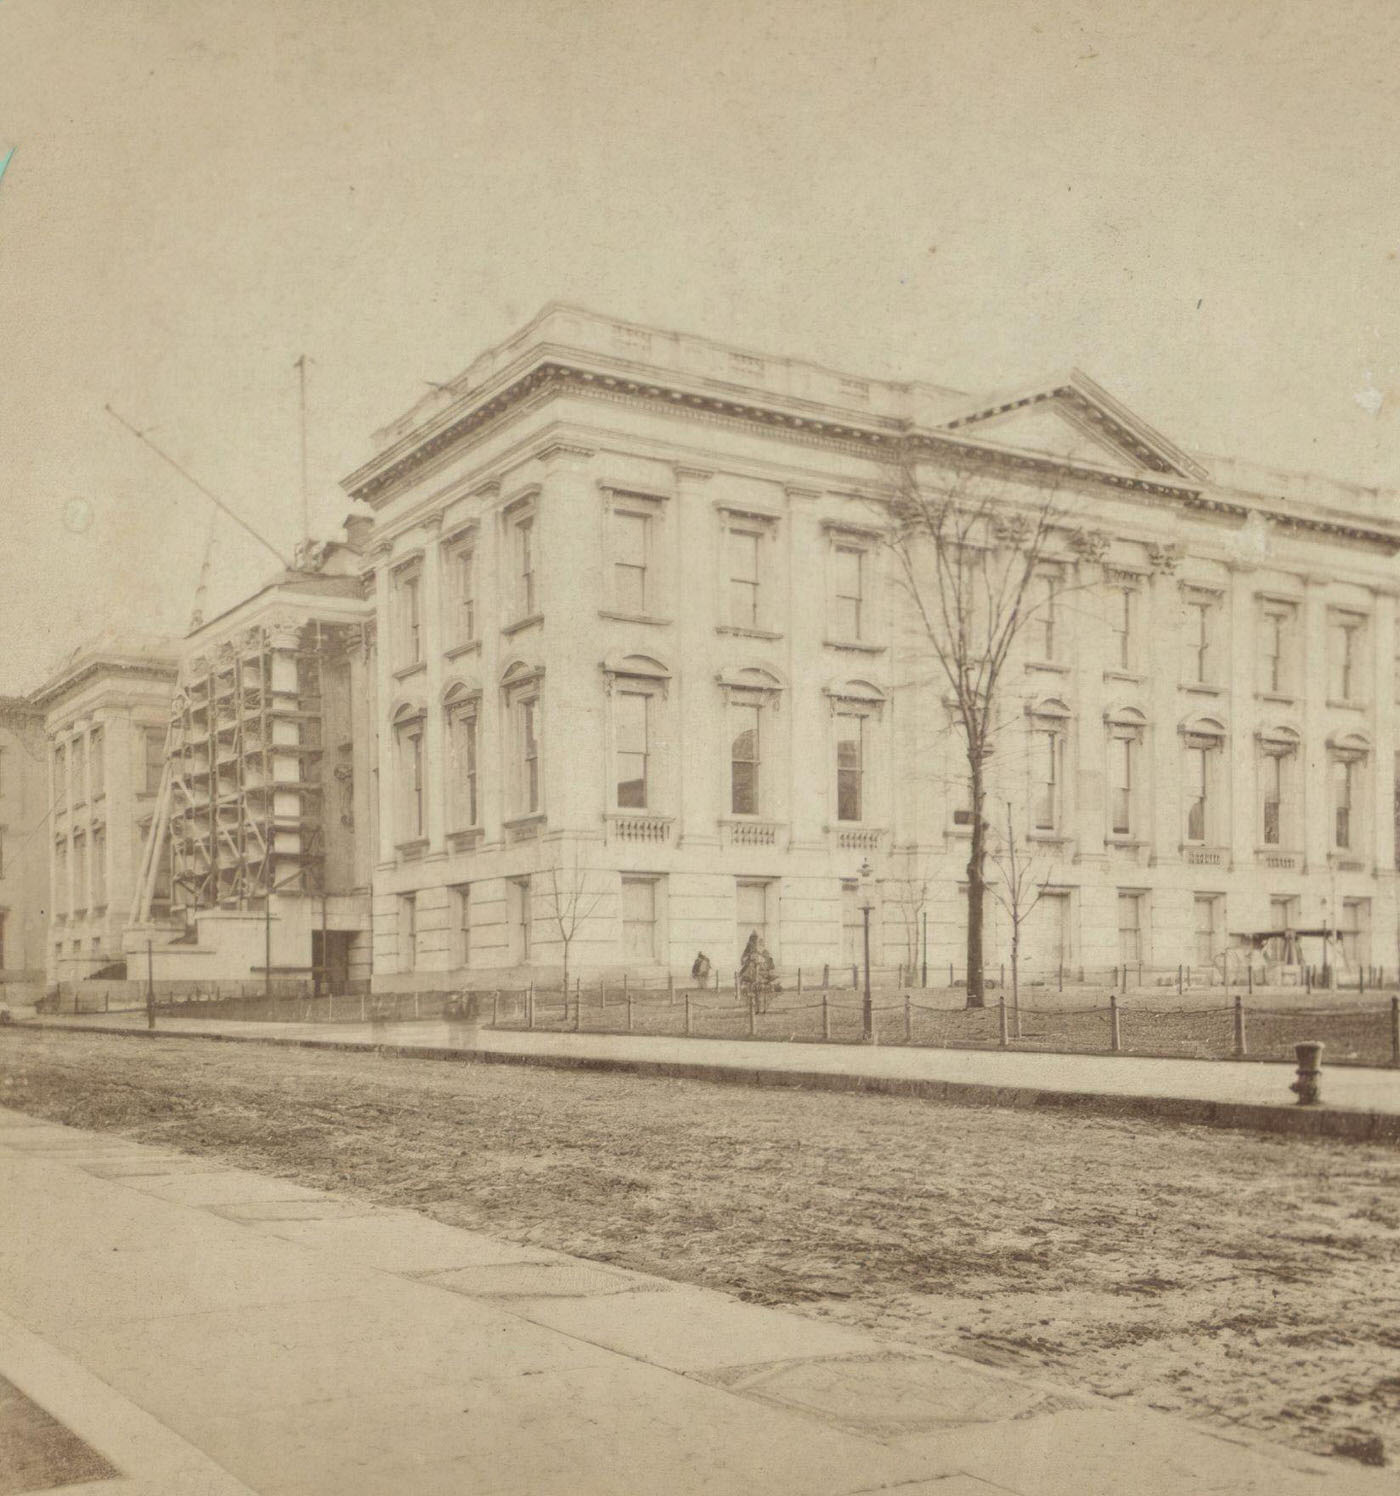 New York Court House, Manhattan, New York City, 1870